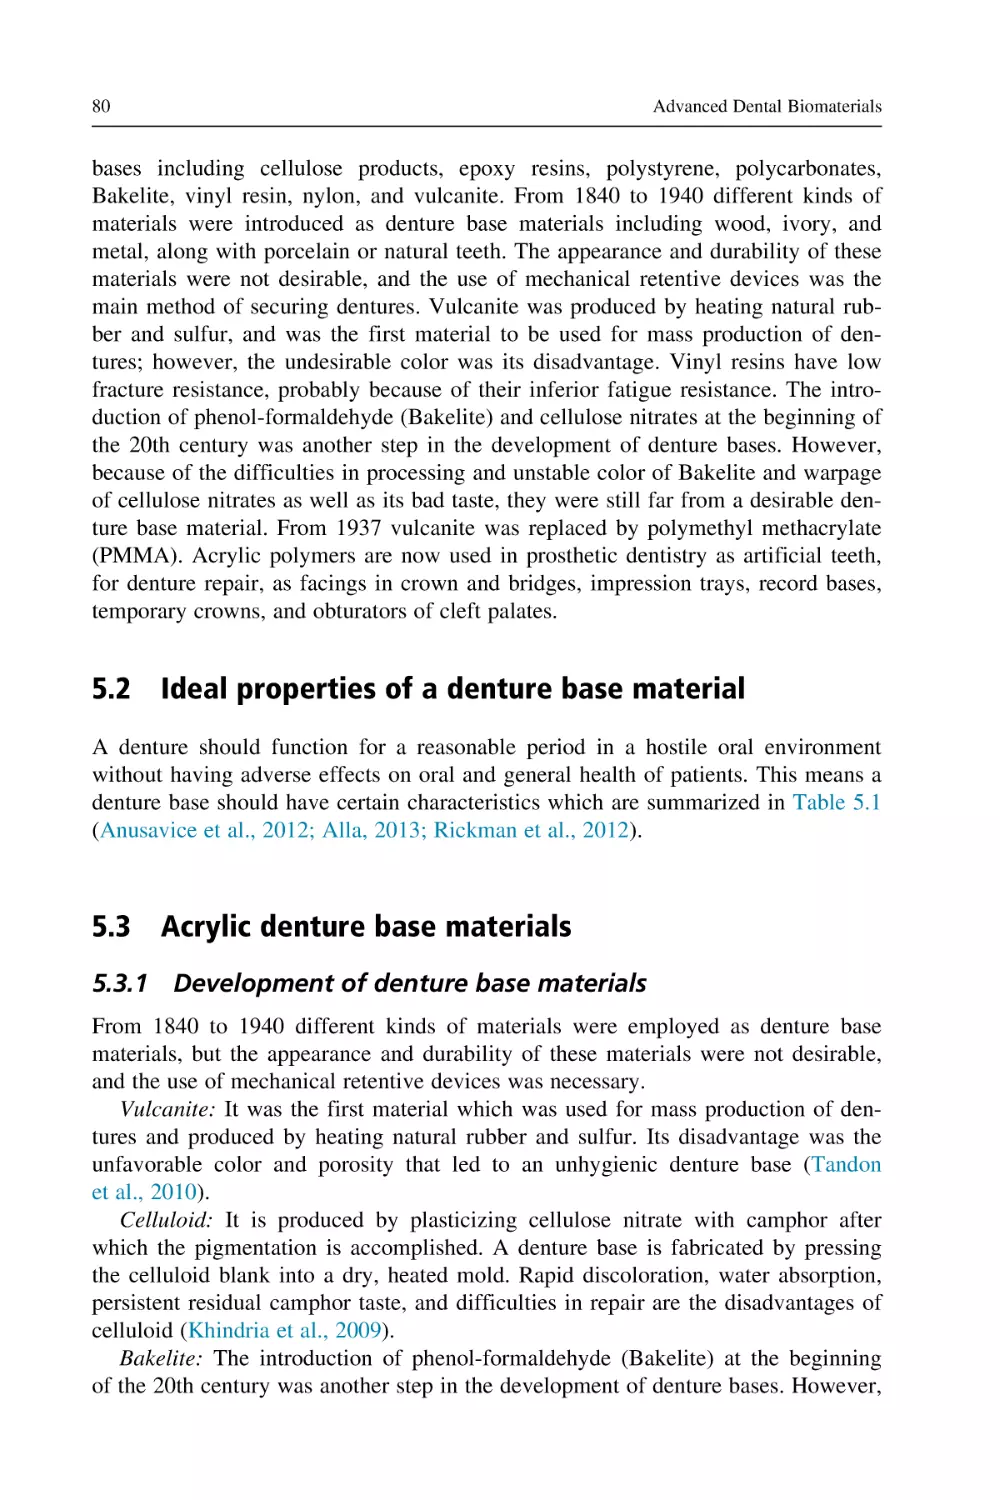 5.2 Ideal properties of a denture base material
5.3 Acrylic denture base materials
5.3.1 Development of denture base materials